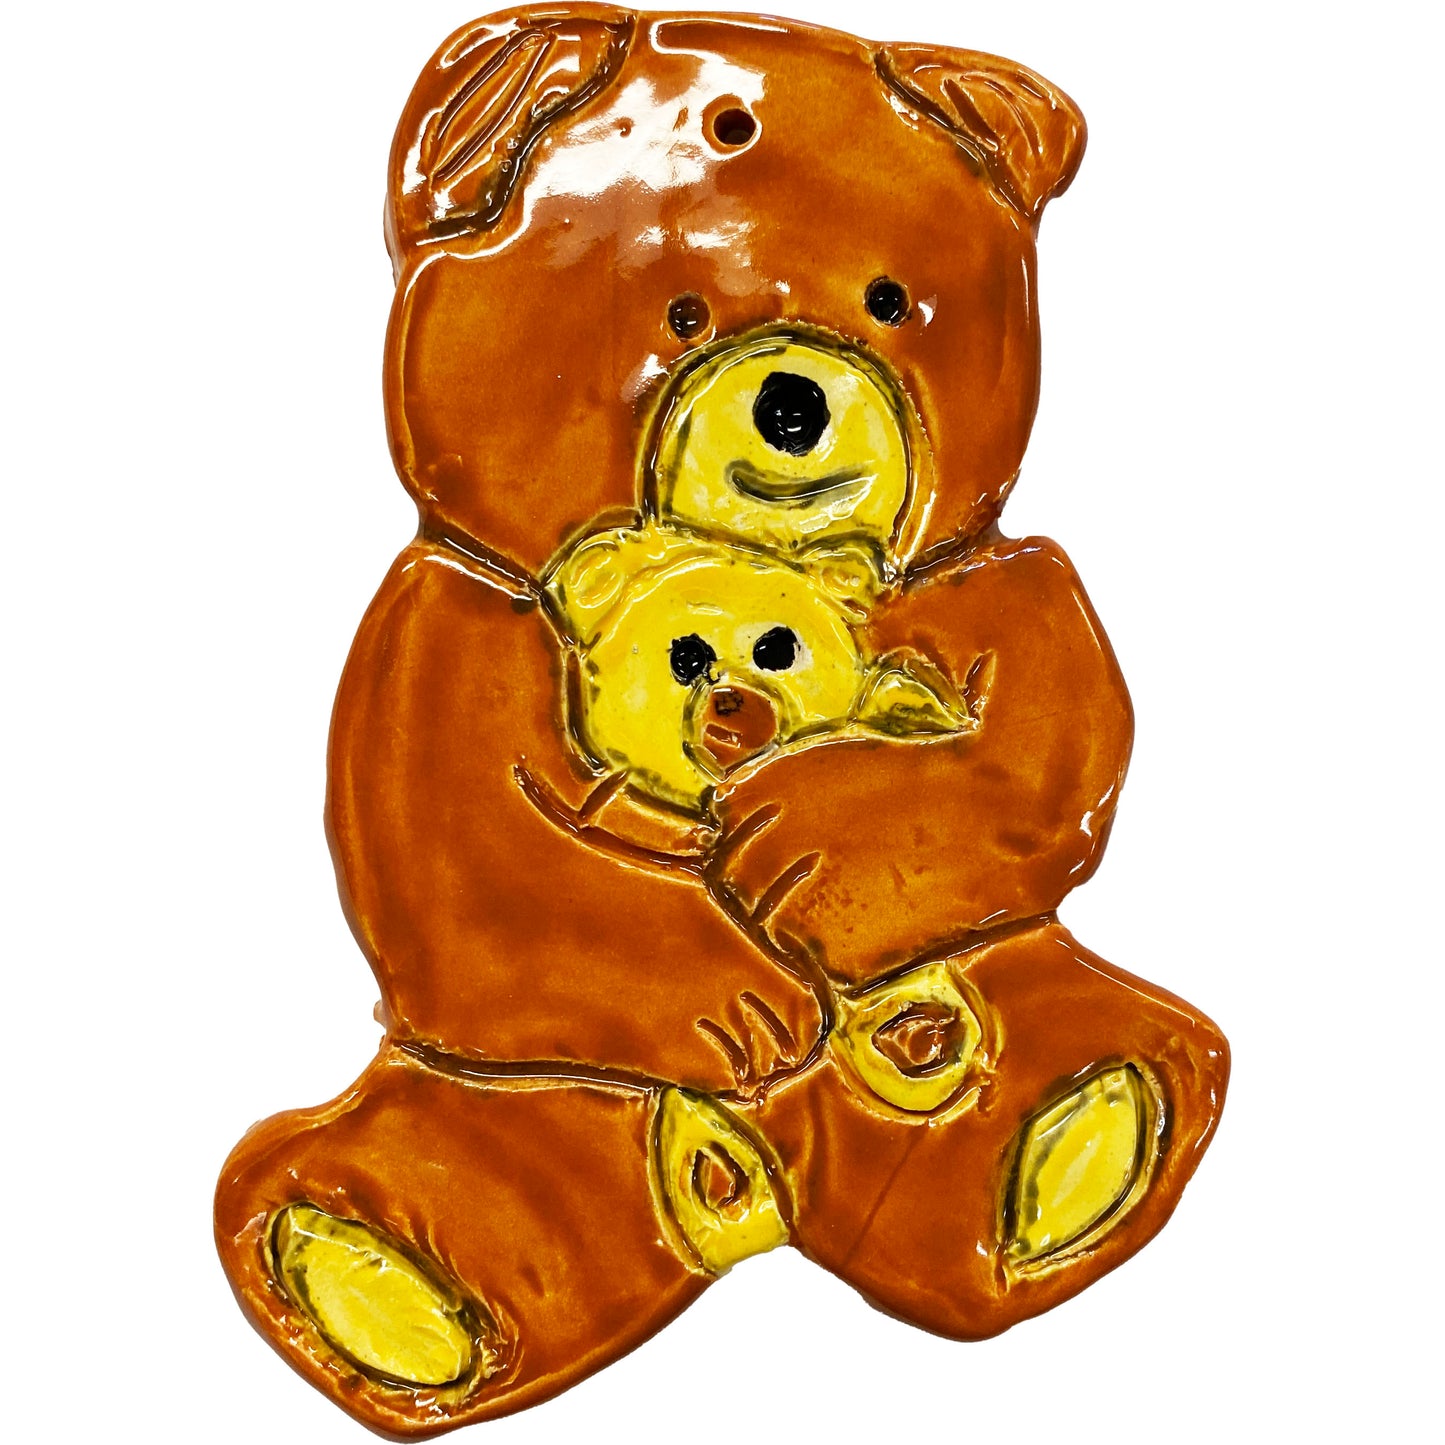 Ceramic Arts Handmade Clay Crafts Glazed 5.5-inch x 4-inch Bear made by Jennifer Horne